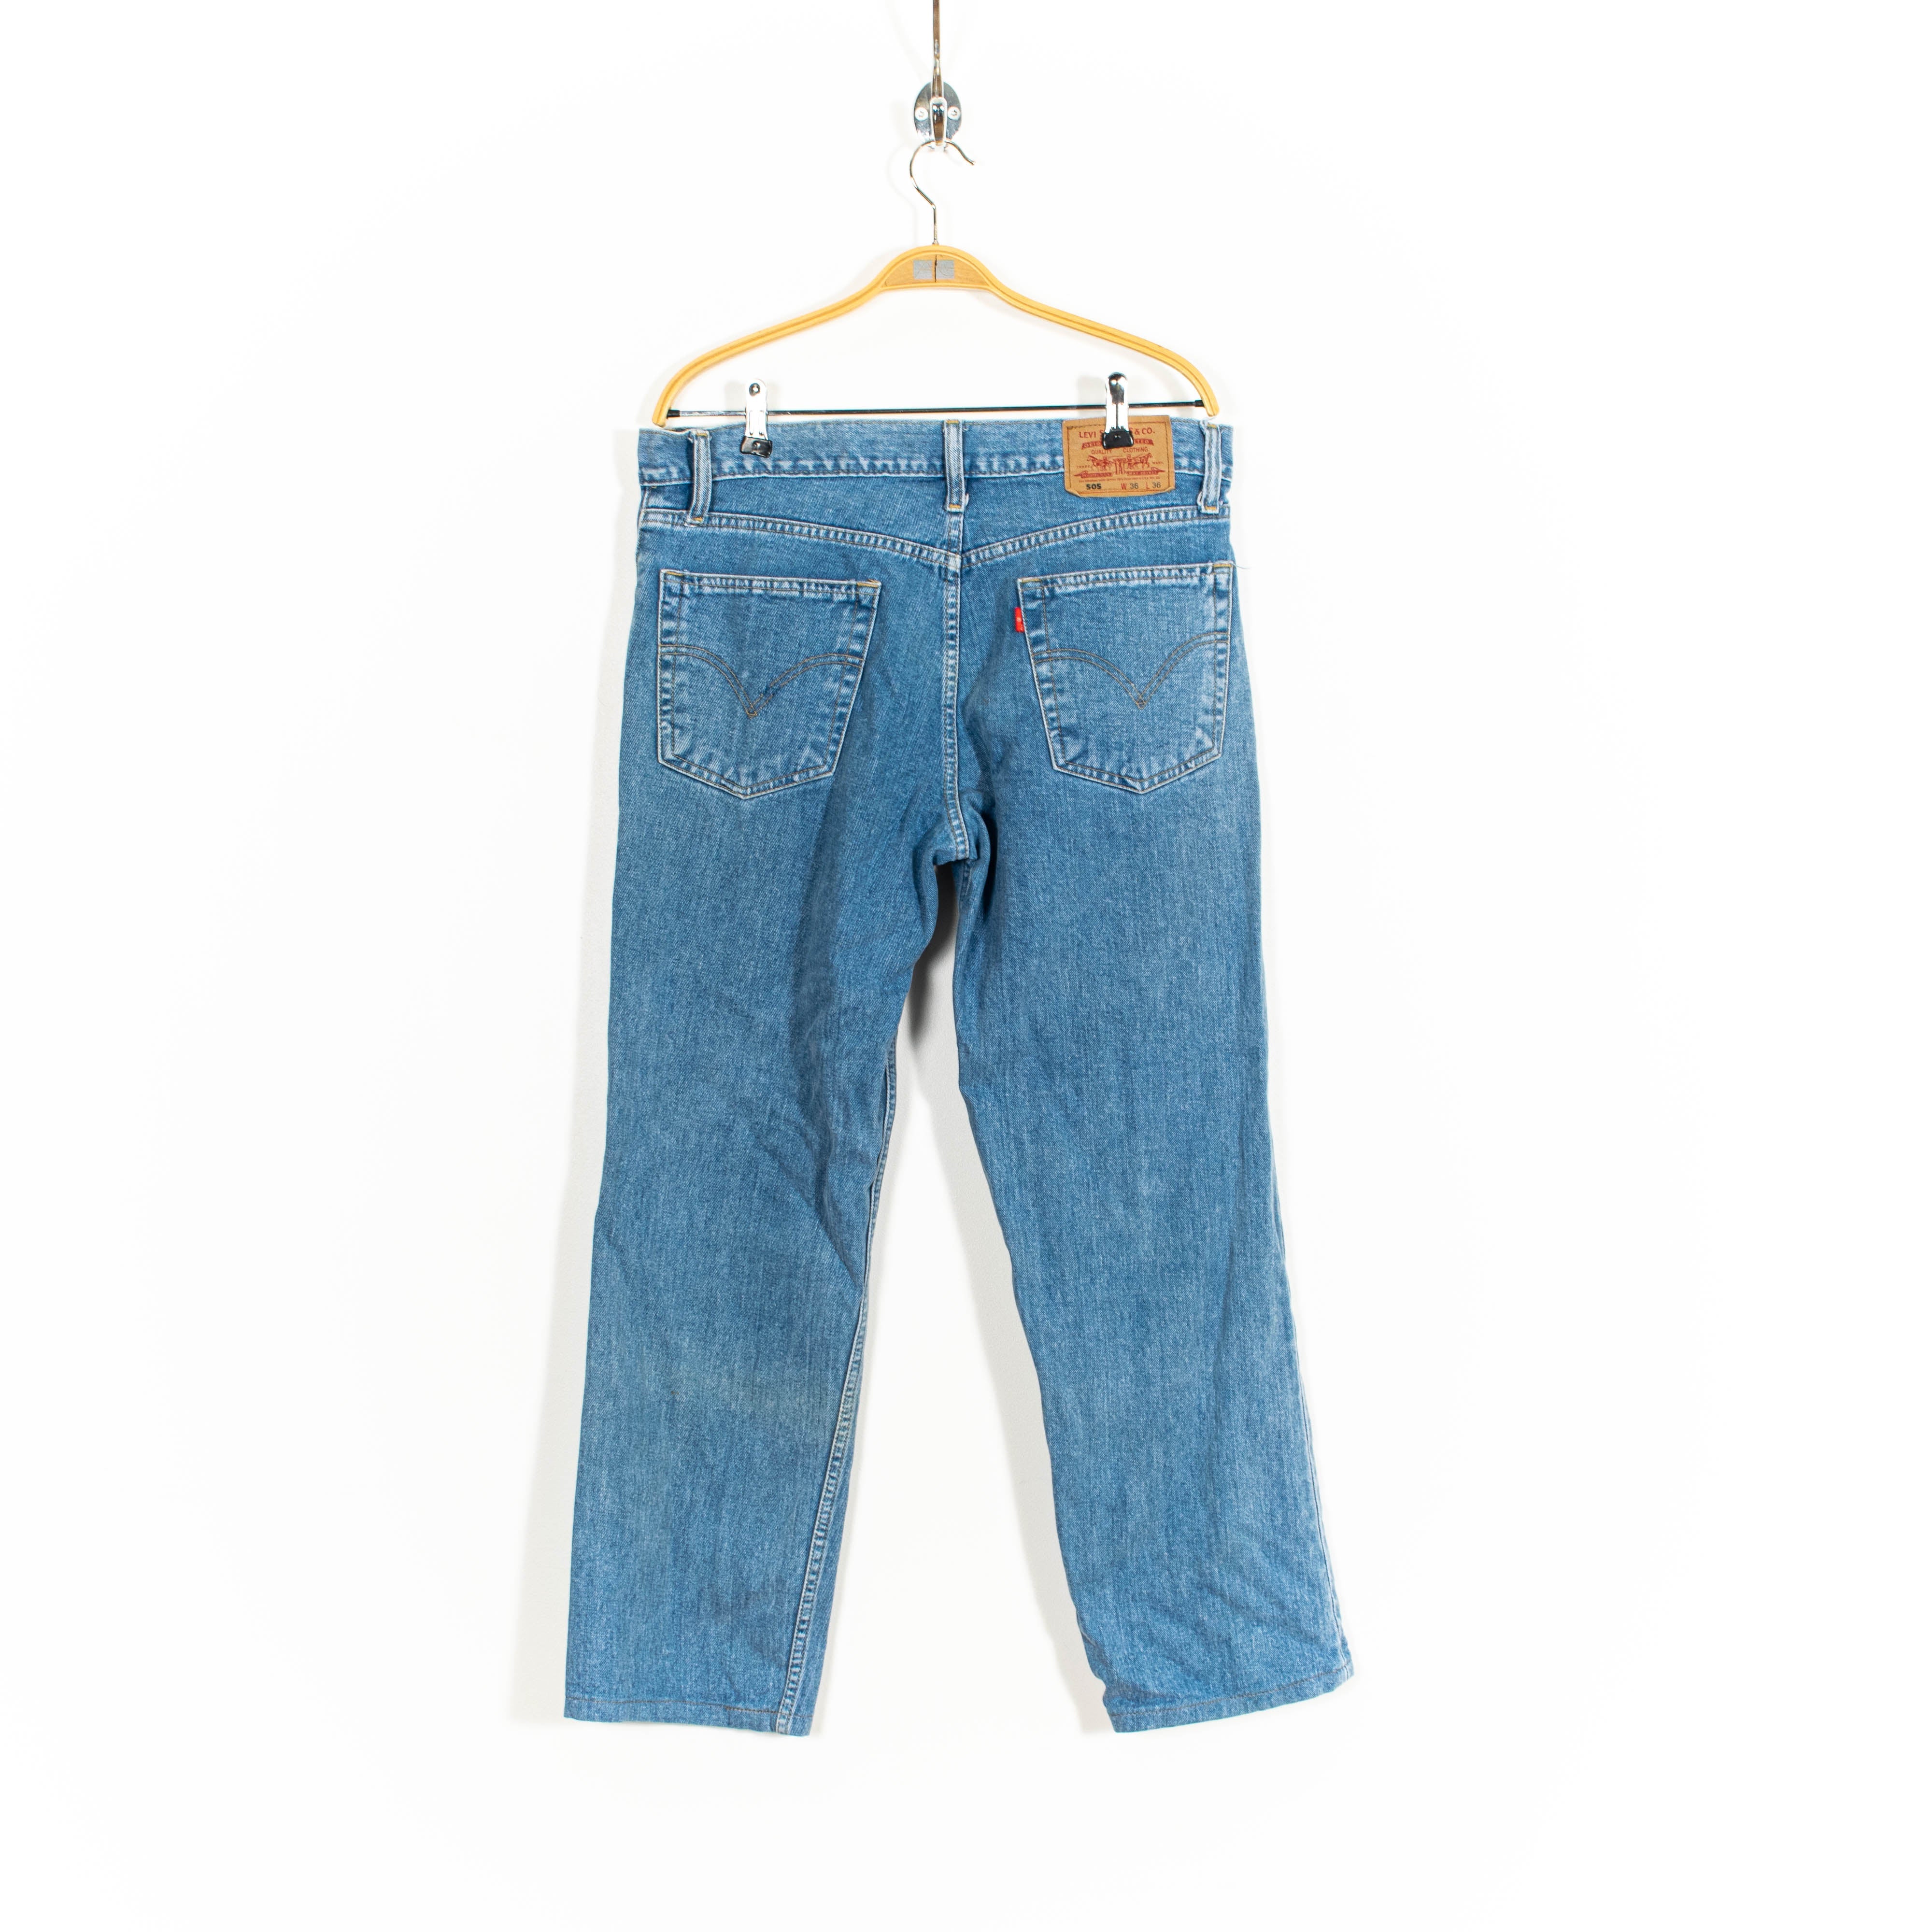 Vintage Levis 505 Light Wash Zip Up Straight Fit Jeans Mens US34